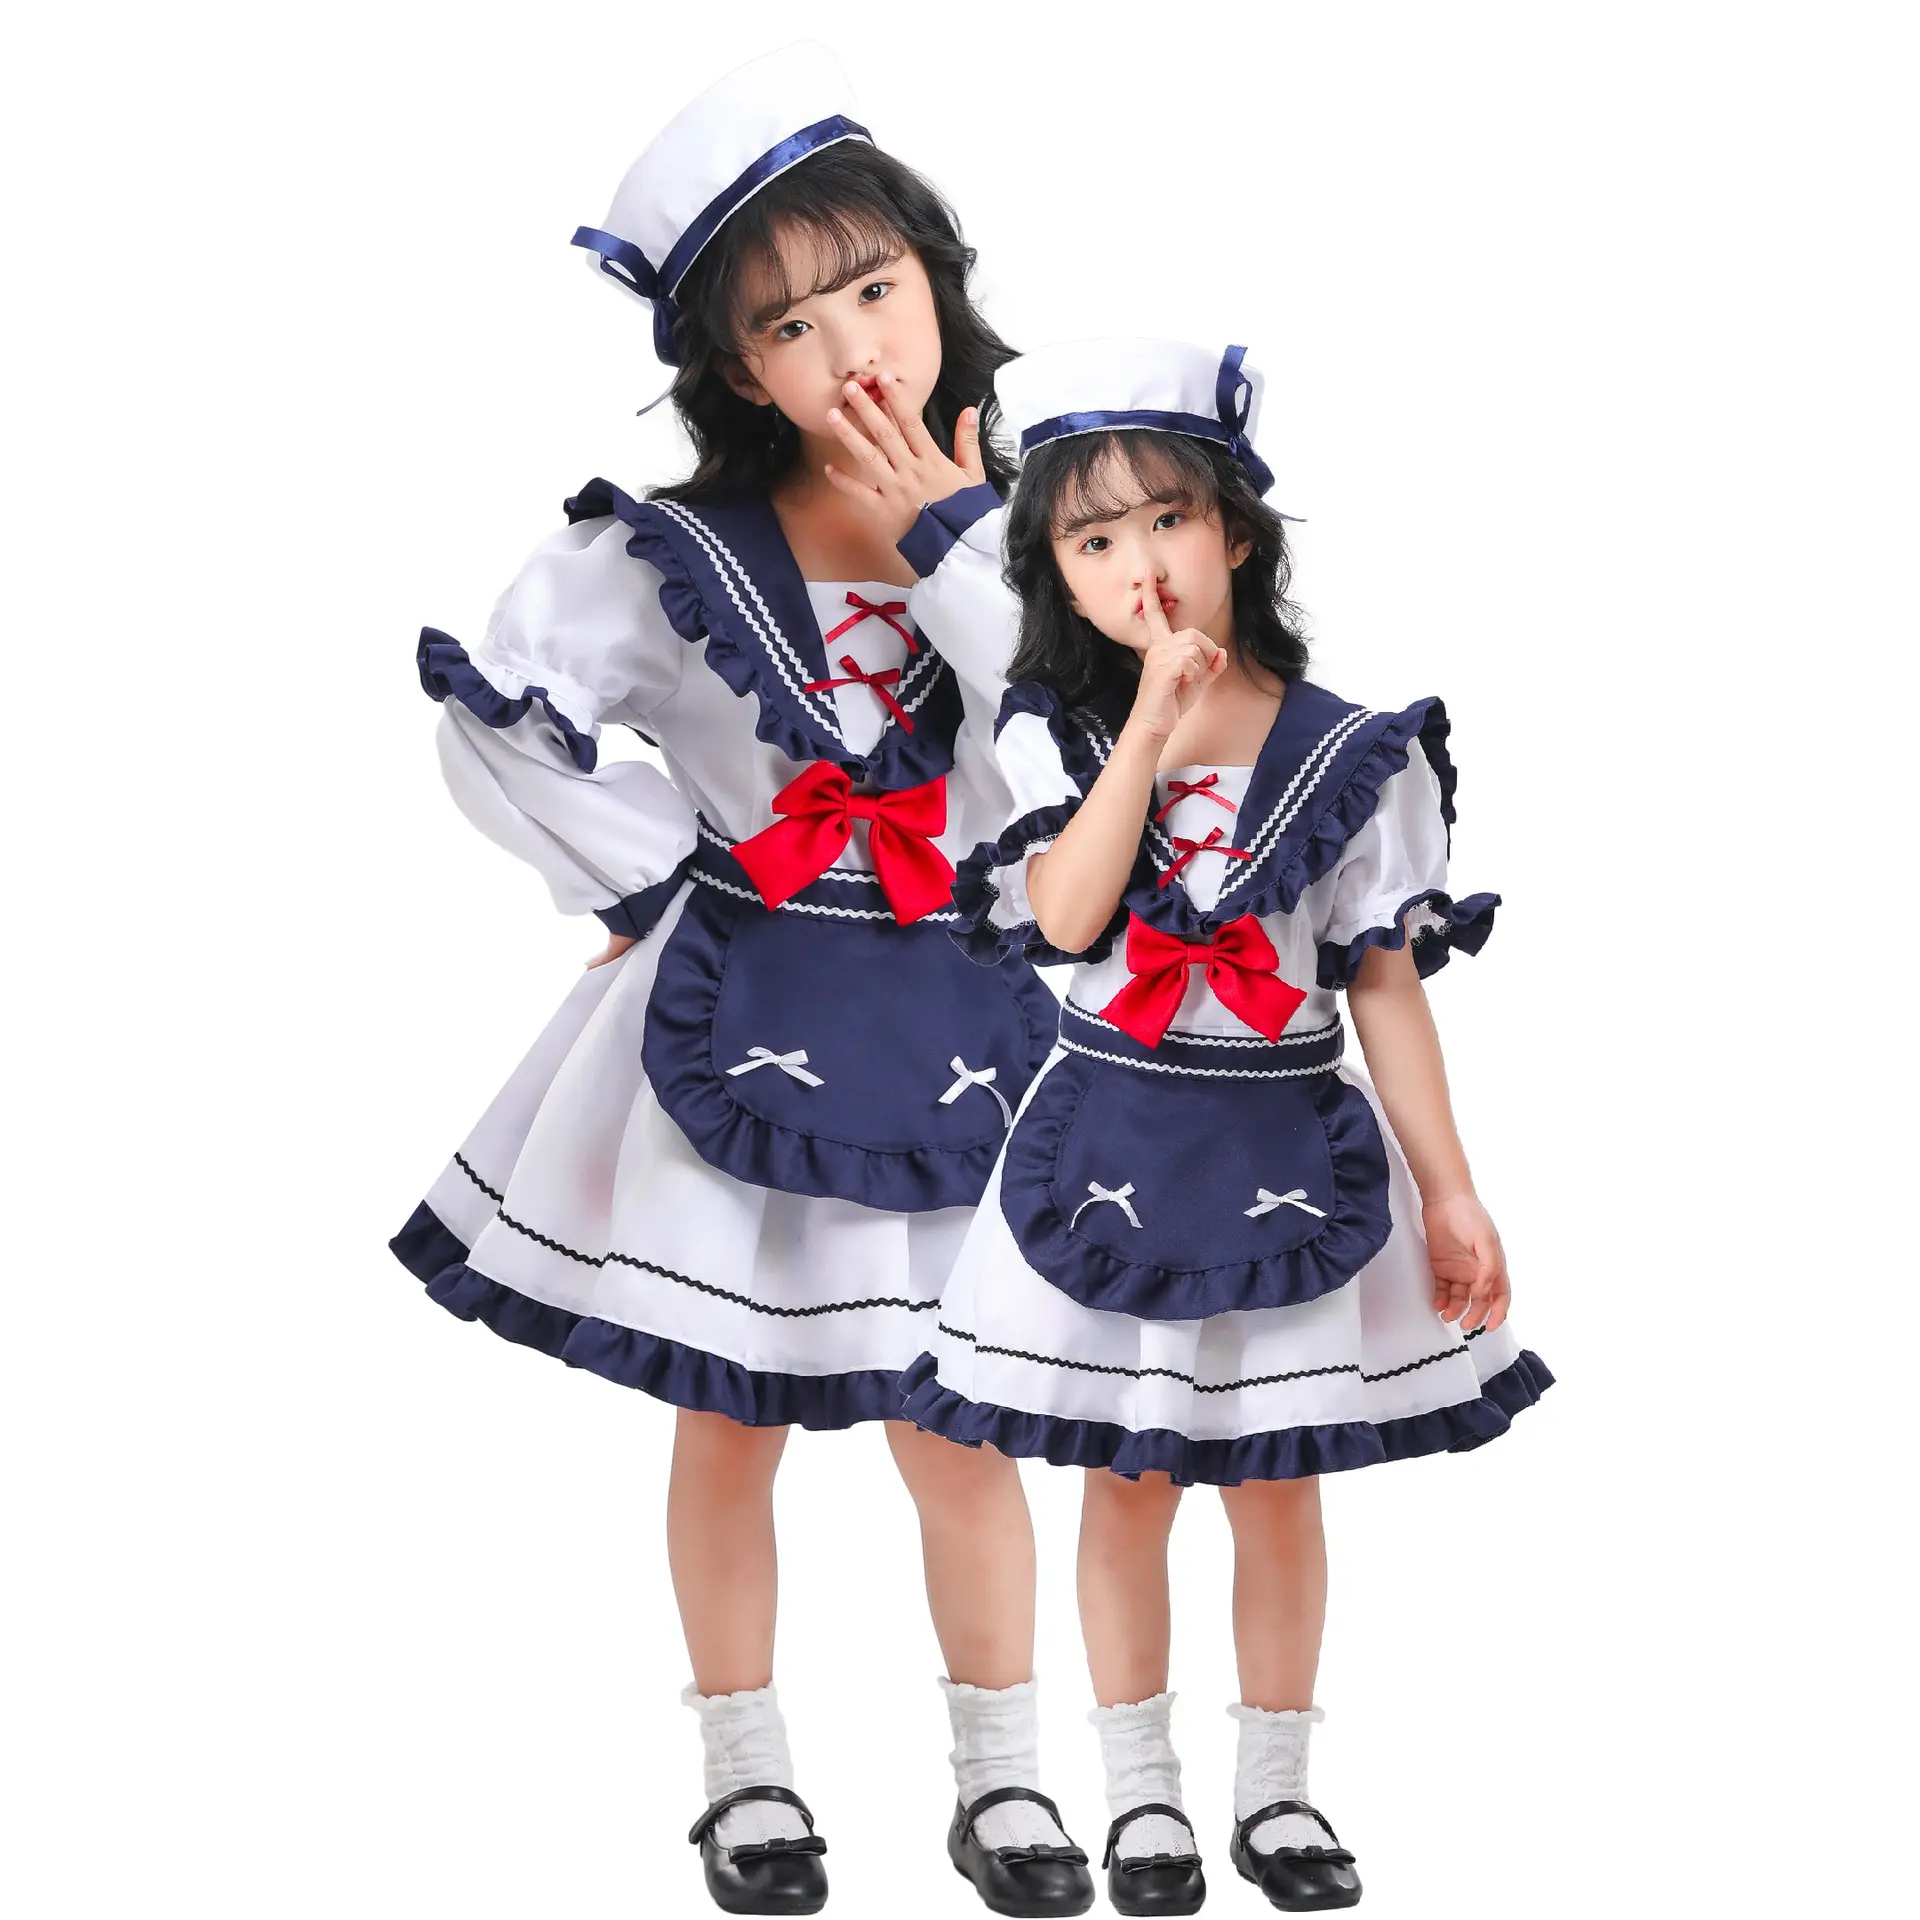 S-l Anime Cos Cute Girl Navy Performance Children's Sailor Costume